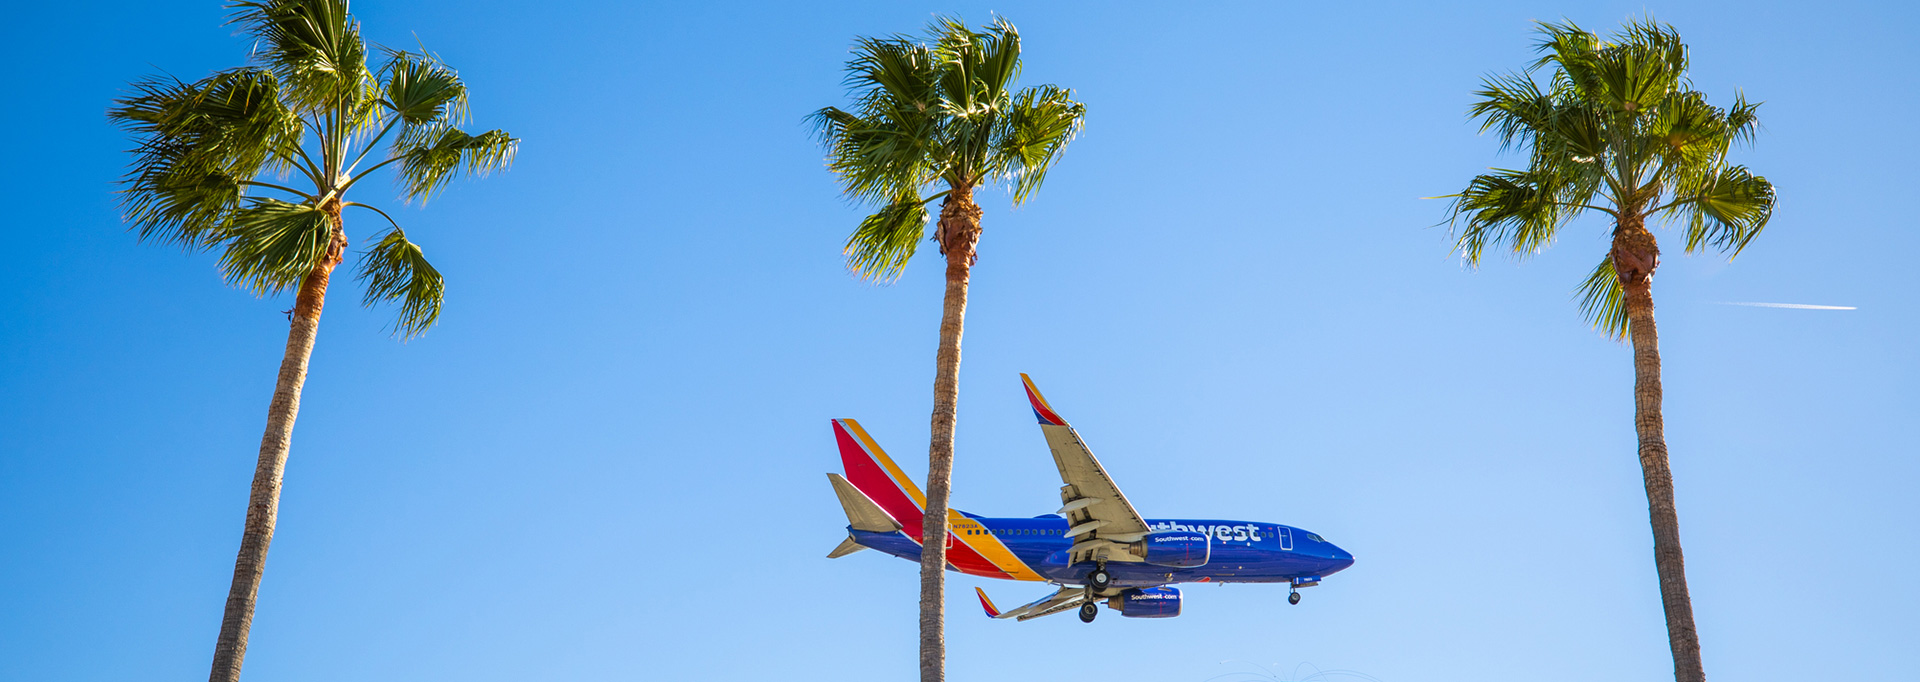 Southwest plane flying past palm trees